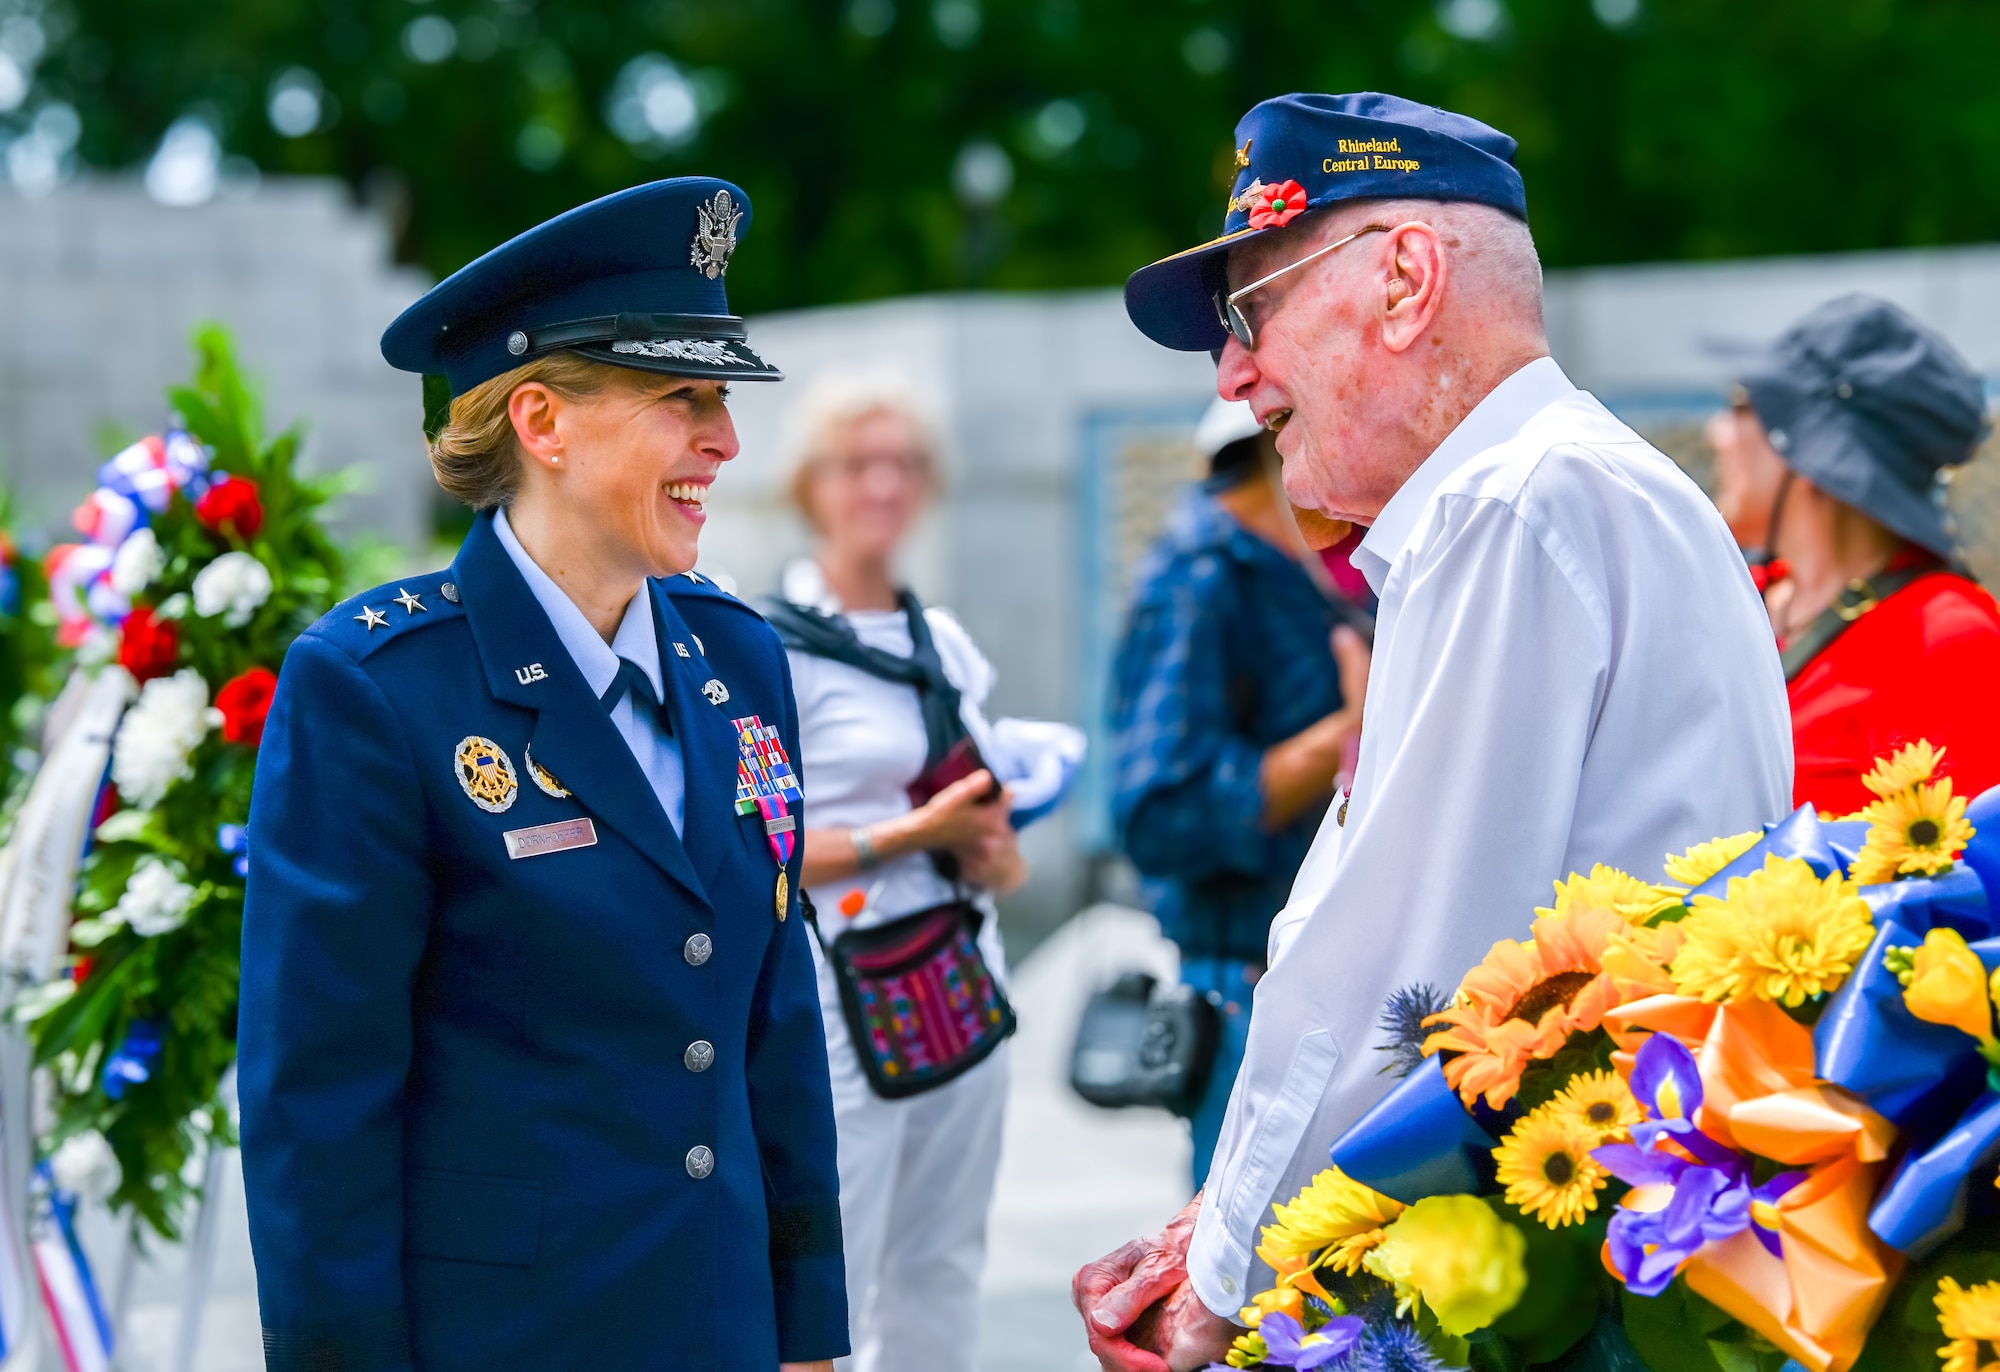 Woman in Air Force blues uniform speaks with elderly man